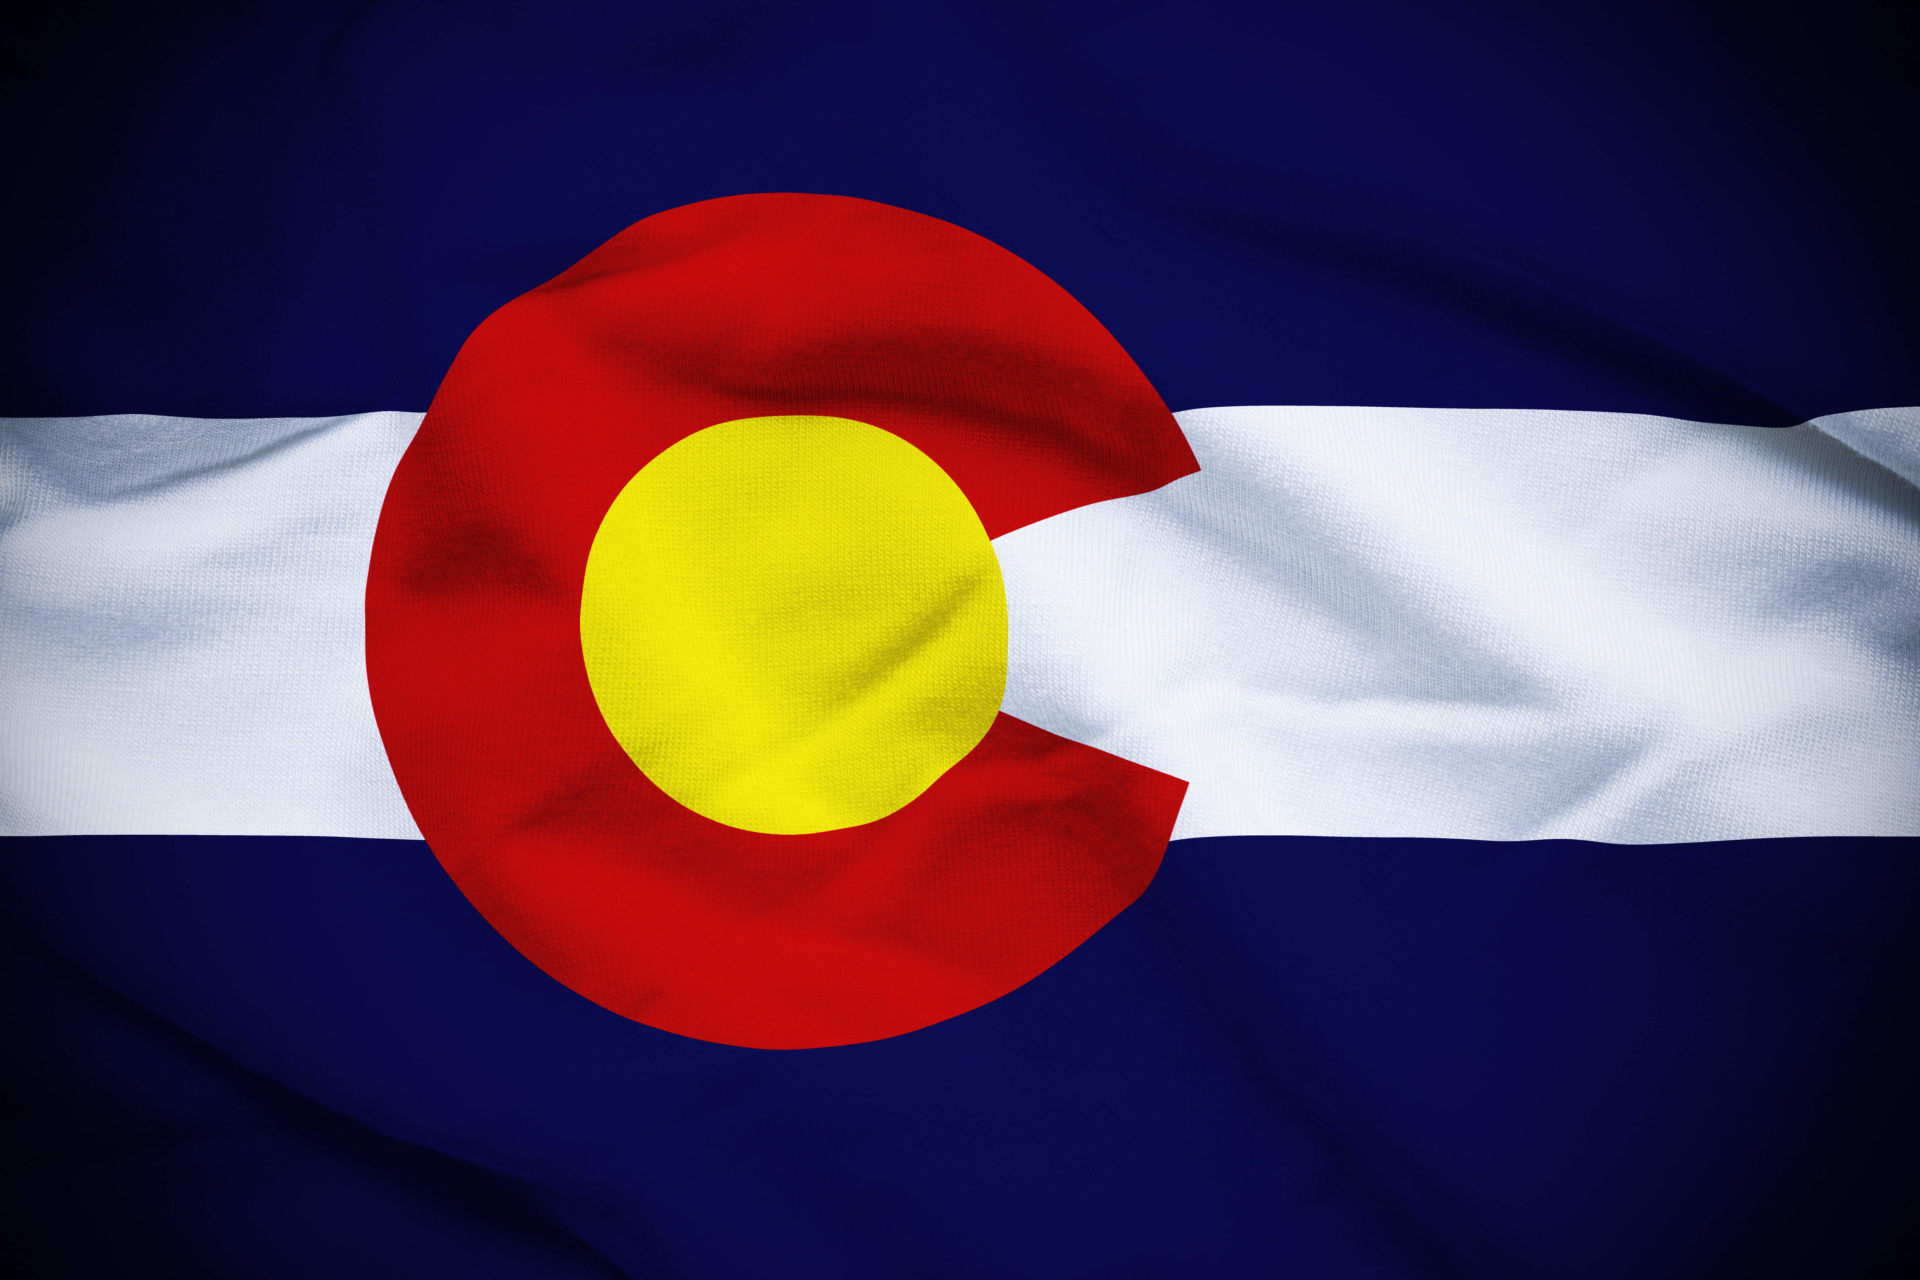 The Colorado state flag.